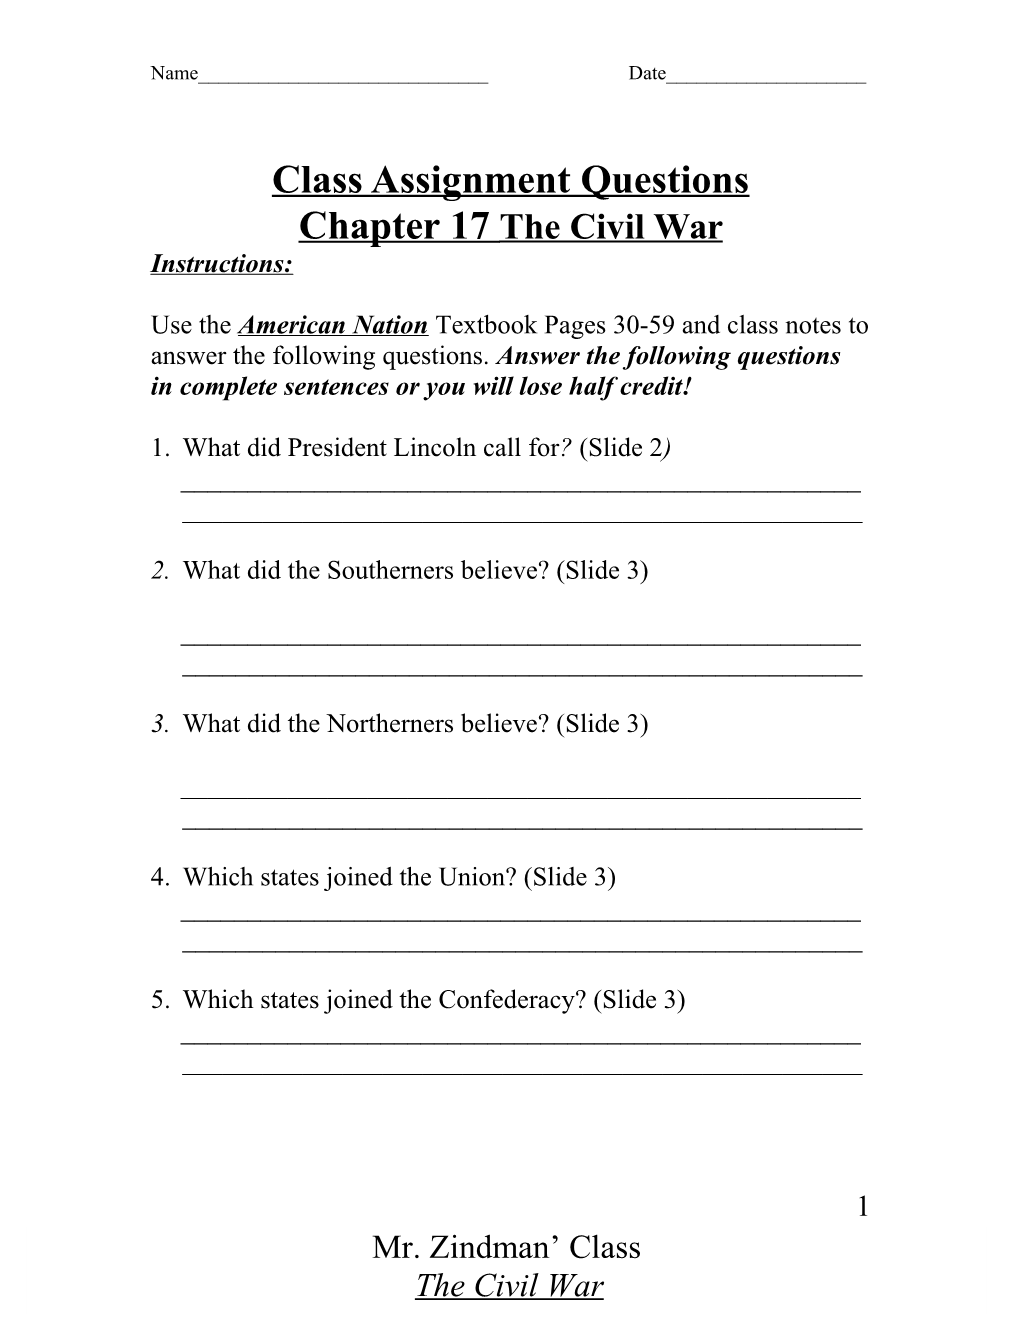 Class Assignment Questions